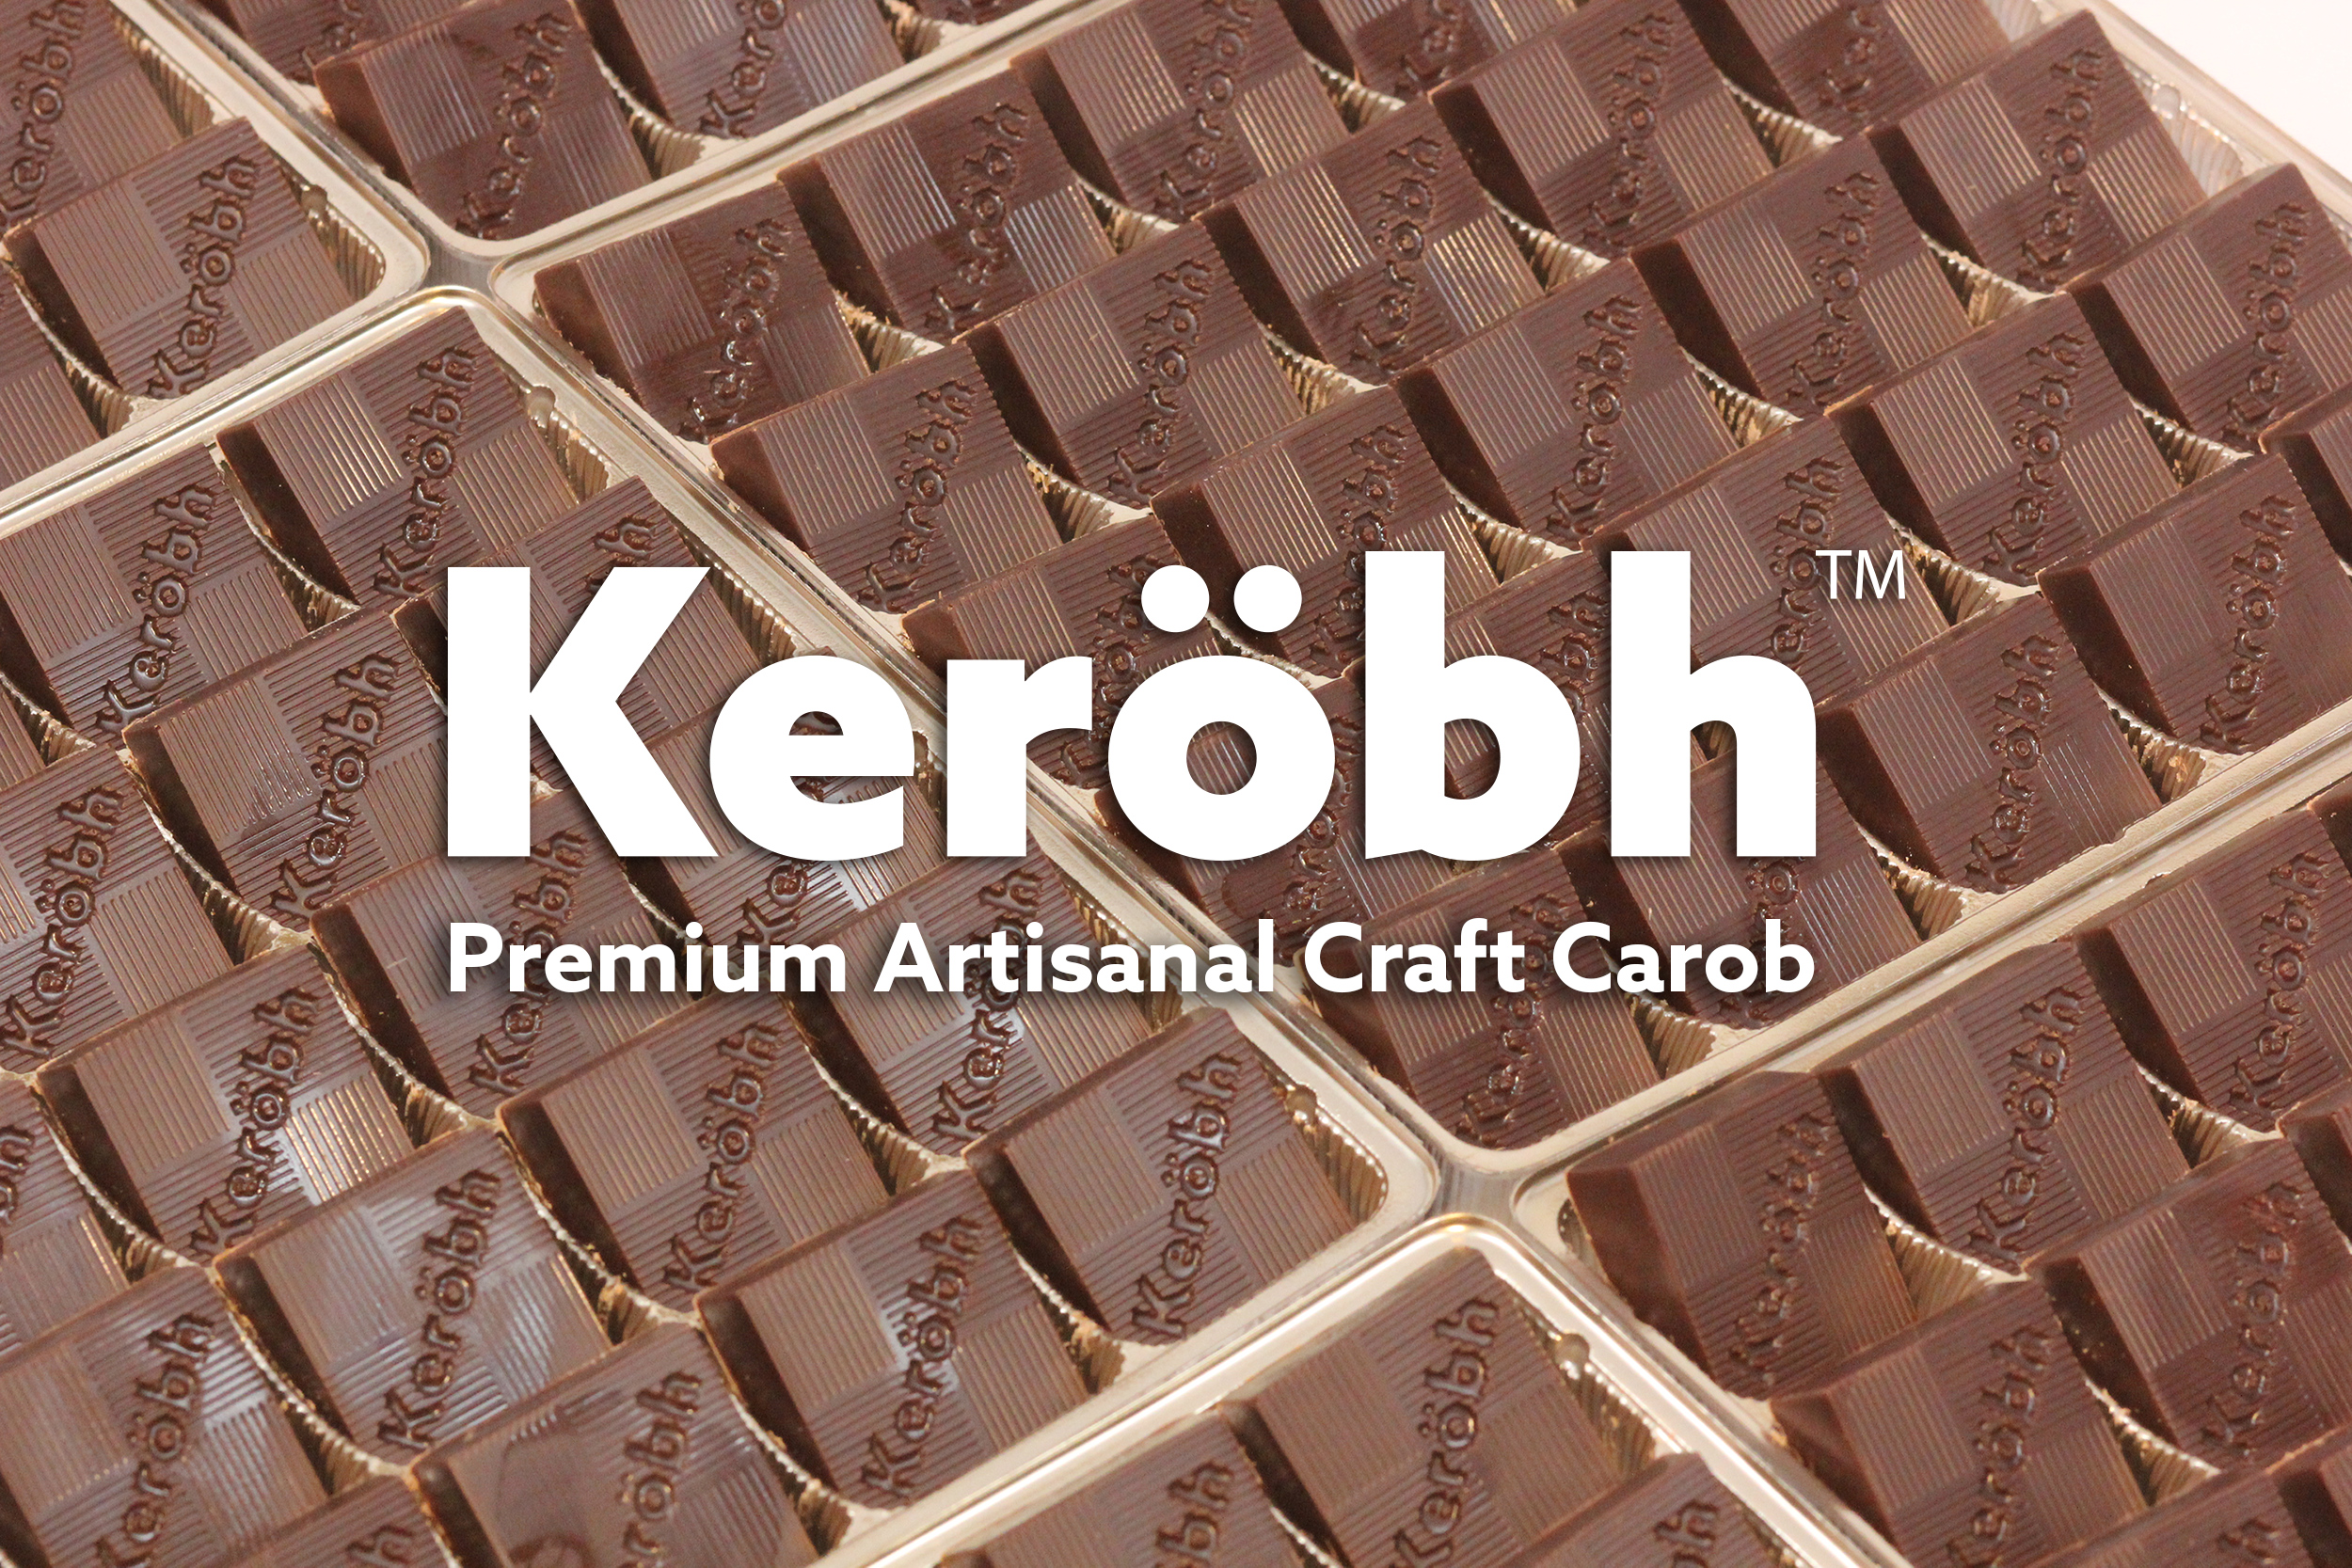 Keröbh, the Premium Artisanal Craft Carob